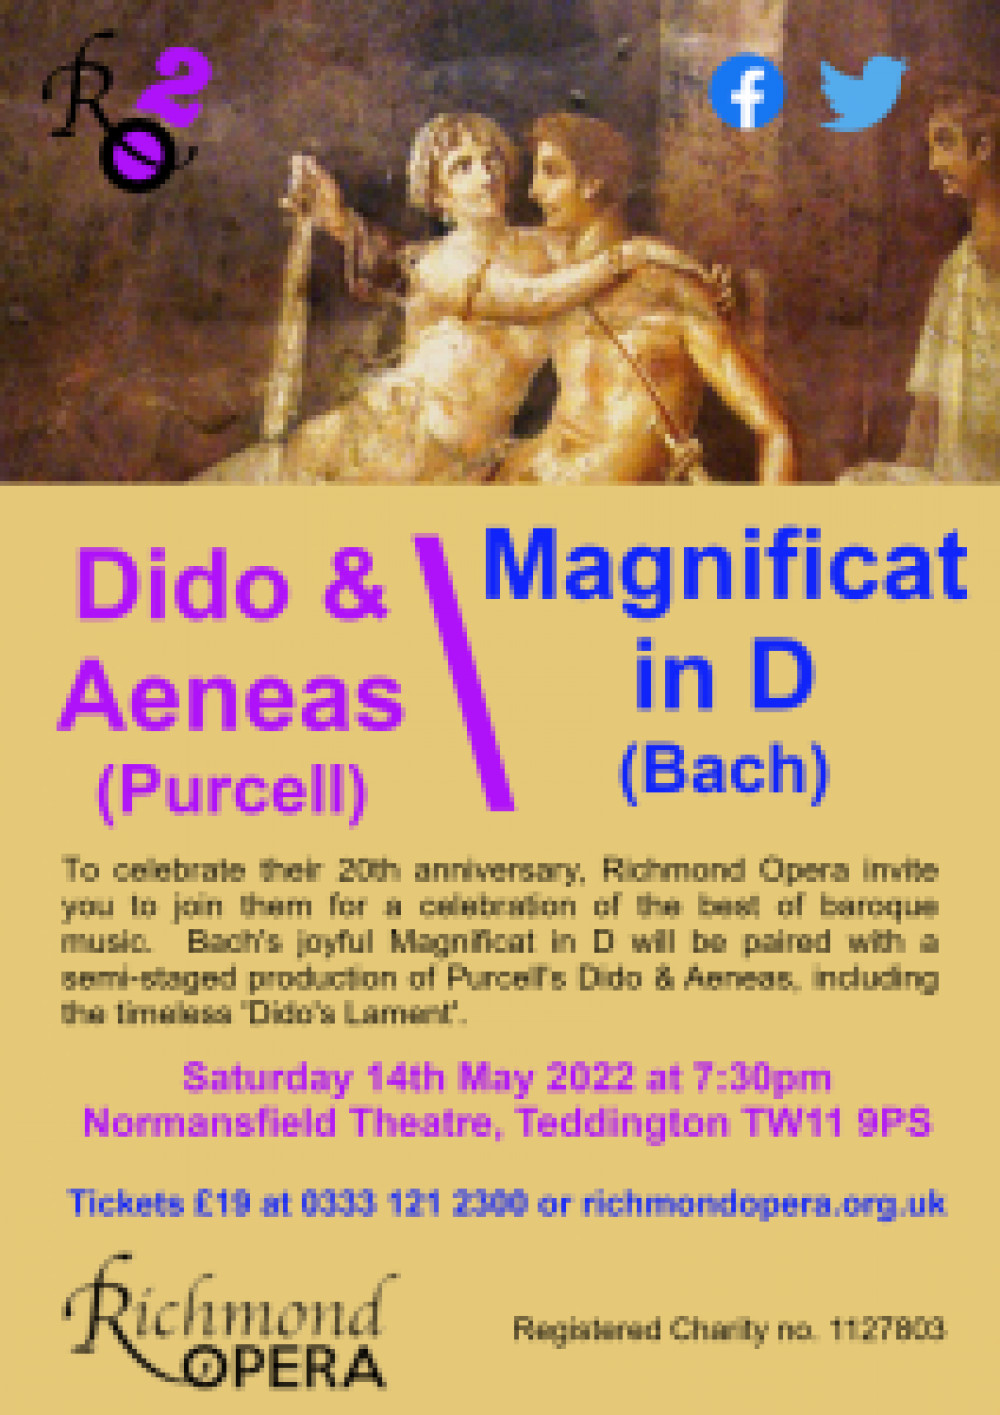 Richmond Opera Dido & Aeneas & Magnificat in D at the Landon Down Centre